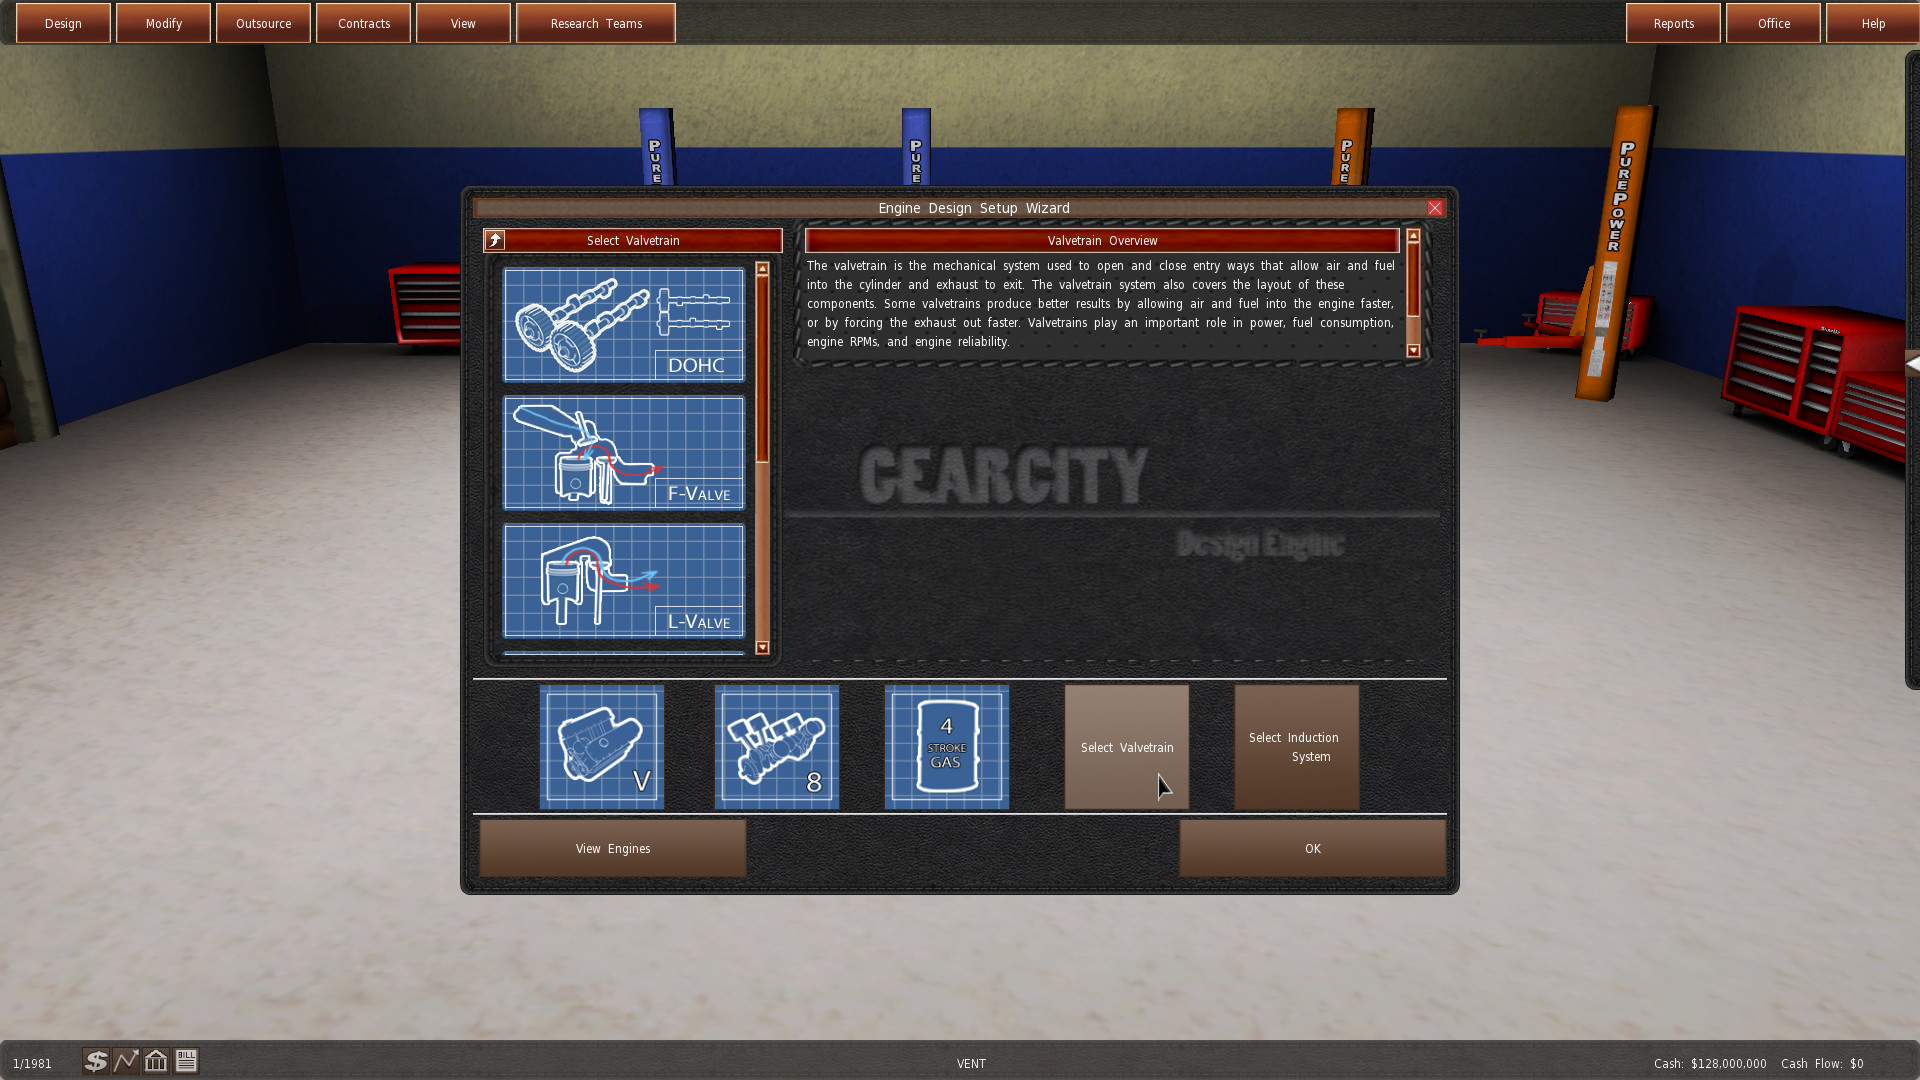 GearCity screenshot